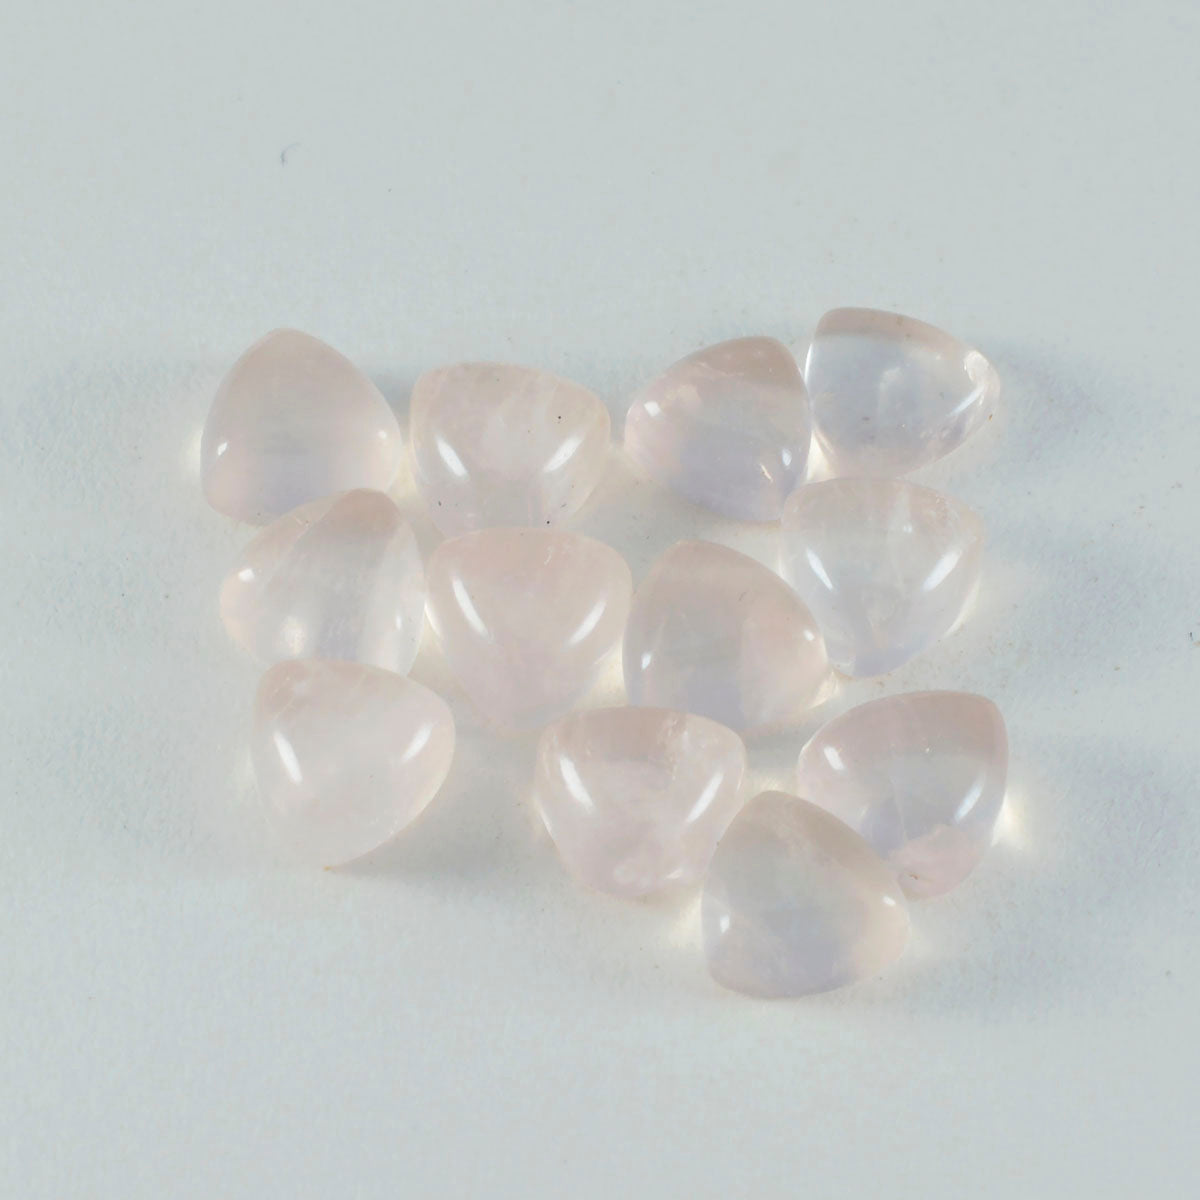 Riyogems 1PC Pink Rose Quartz Cabochon 15x15 mm Trillion Shape attractive Quality Loose Stone